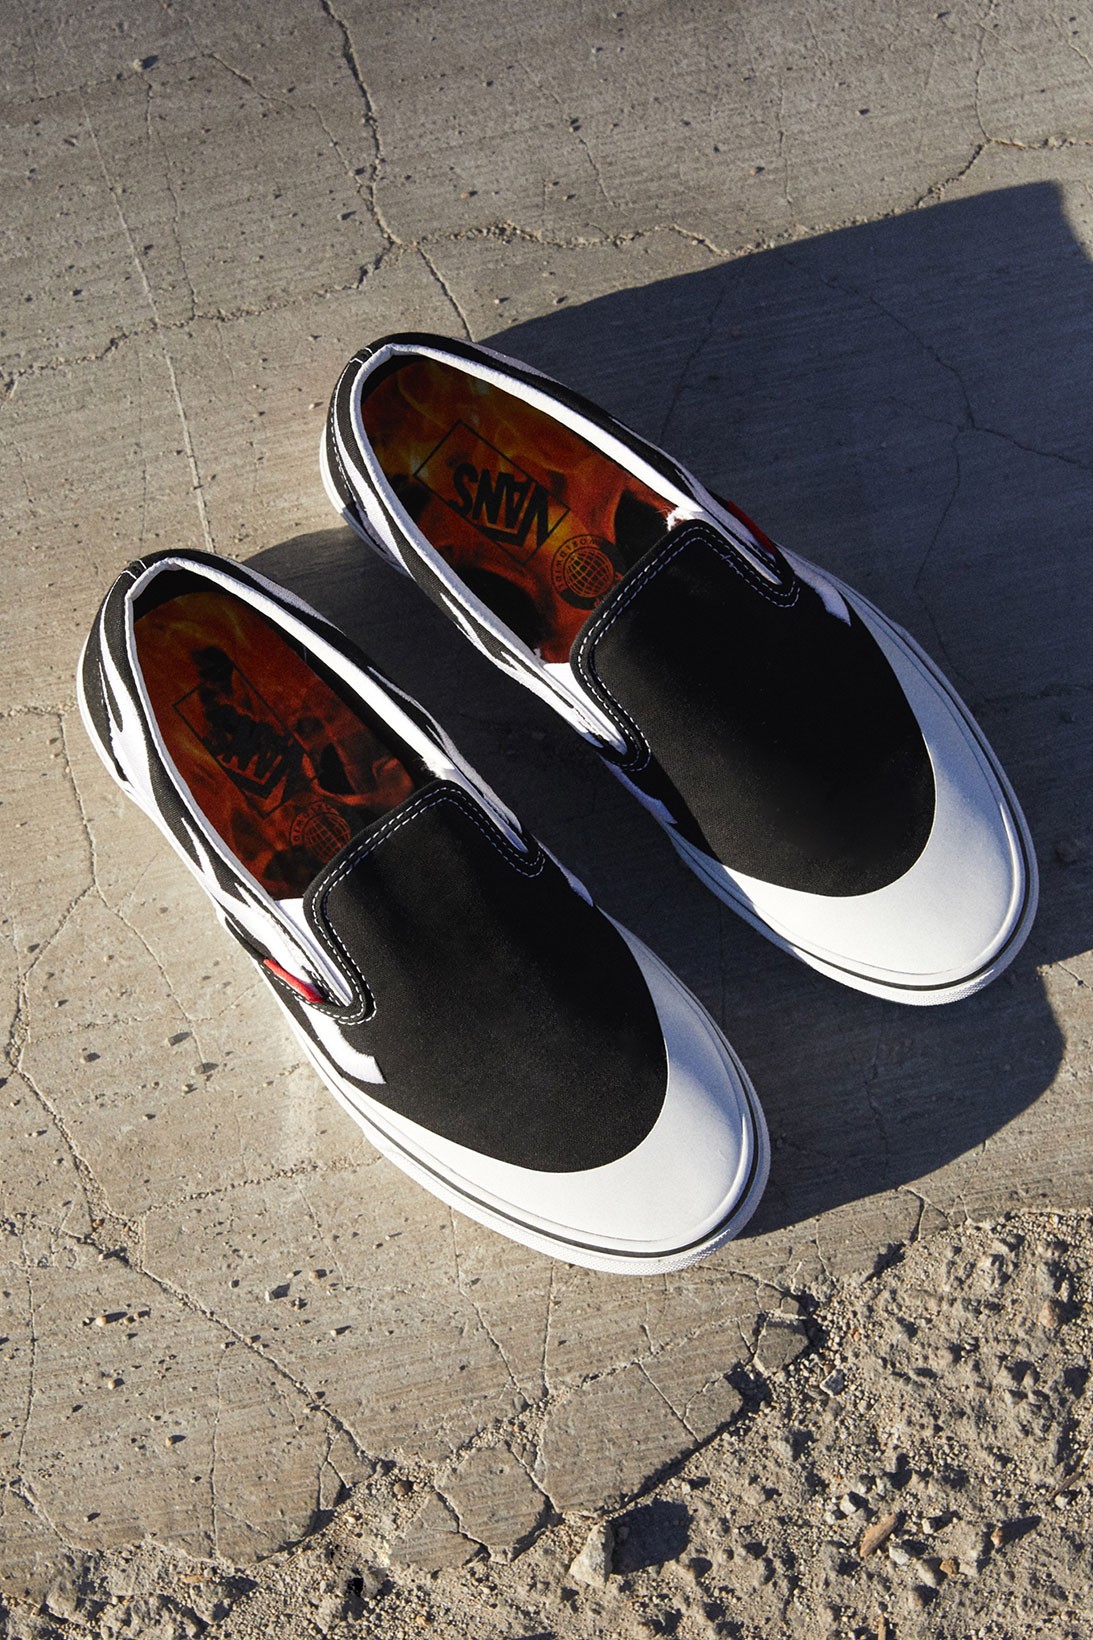 Vans Slip-on Mule Black White Asap Rocky Men's Fashion Skate Shoes  Sneakers